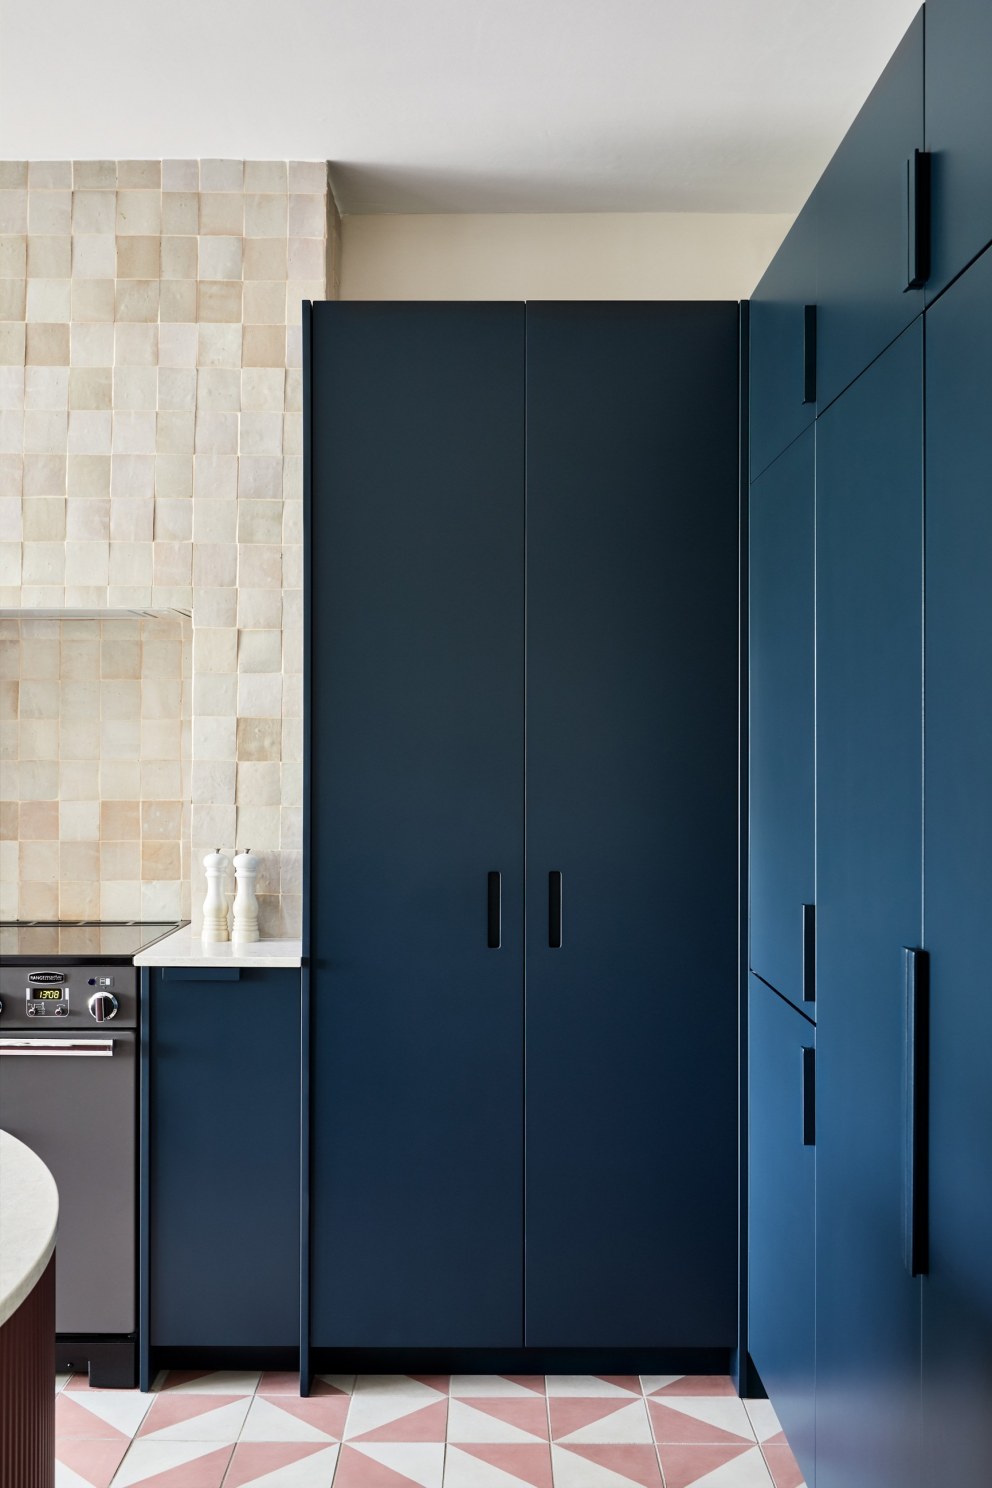 Scandi-style restraint, with a playful edge | Dorset Road kitchen | Interior Designers